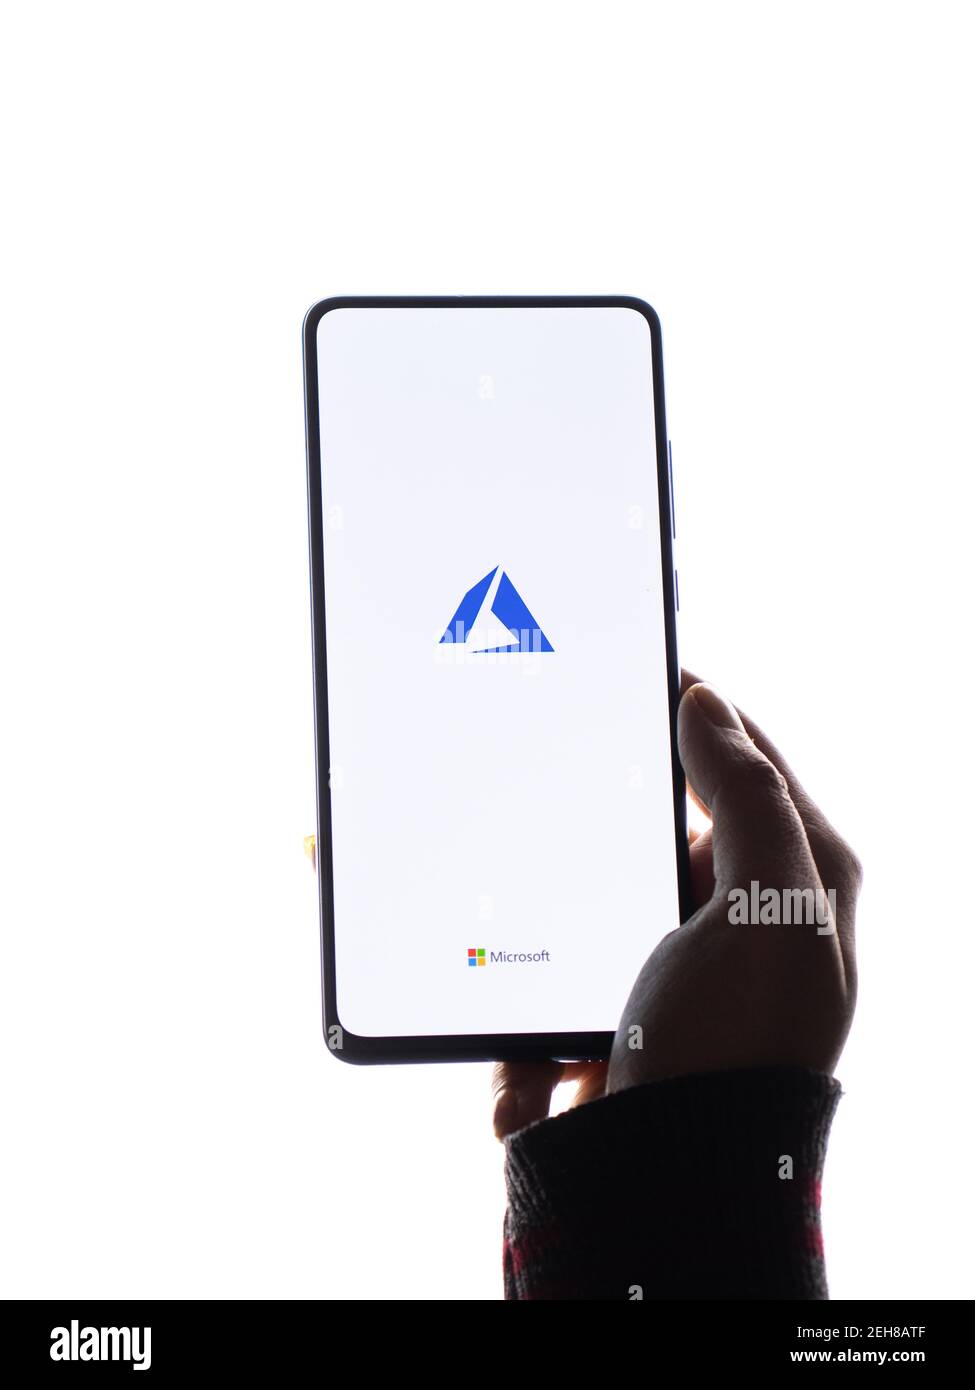 Assam, india - November 15, 2020 : Microsoft Azure logo on phone screen stock image. Stock Photo